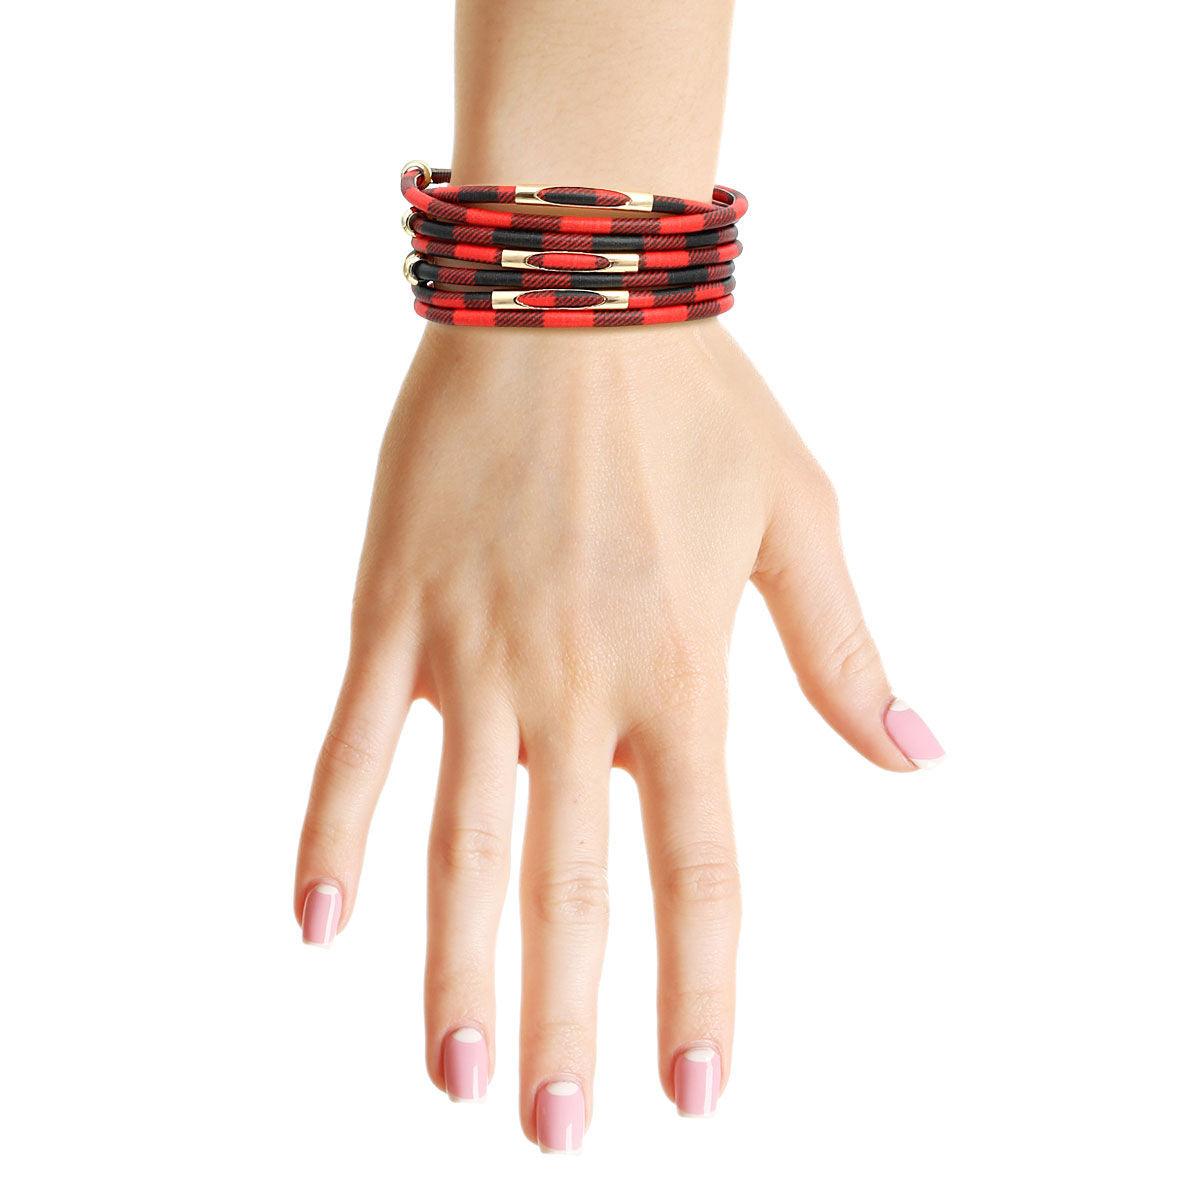 Trendy Red Cord Bracelet: Shop Now for Stylish Women's Jewelry